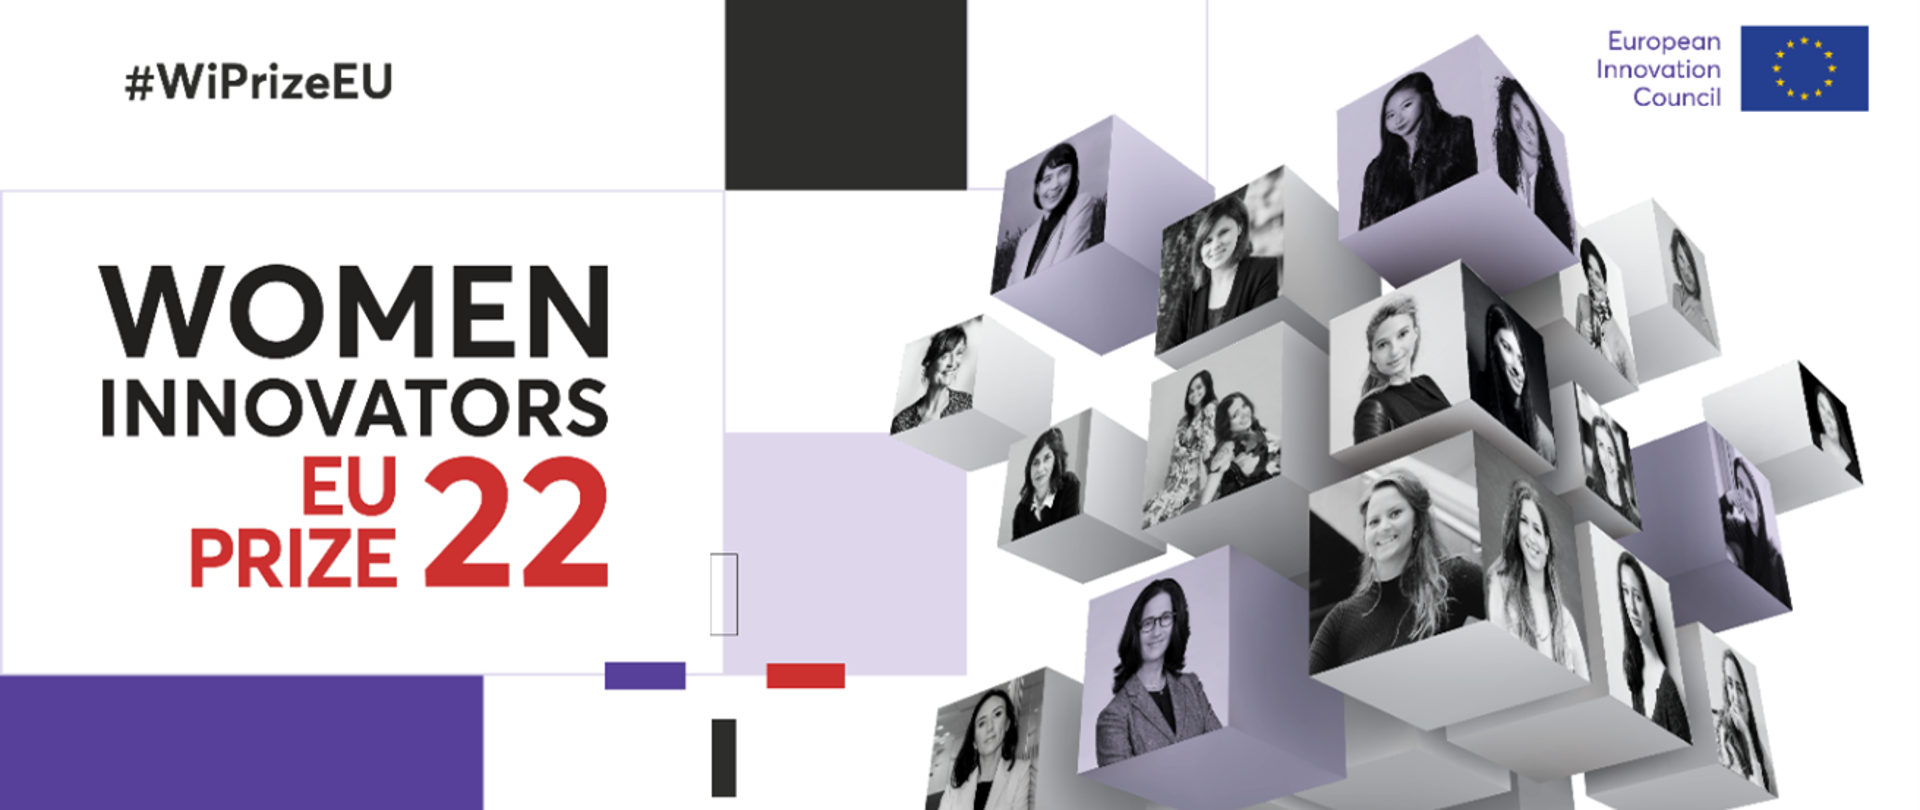 #WiPrizeEu
Women Innovators
EU Prize 22